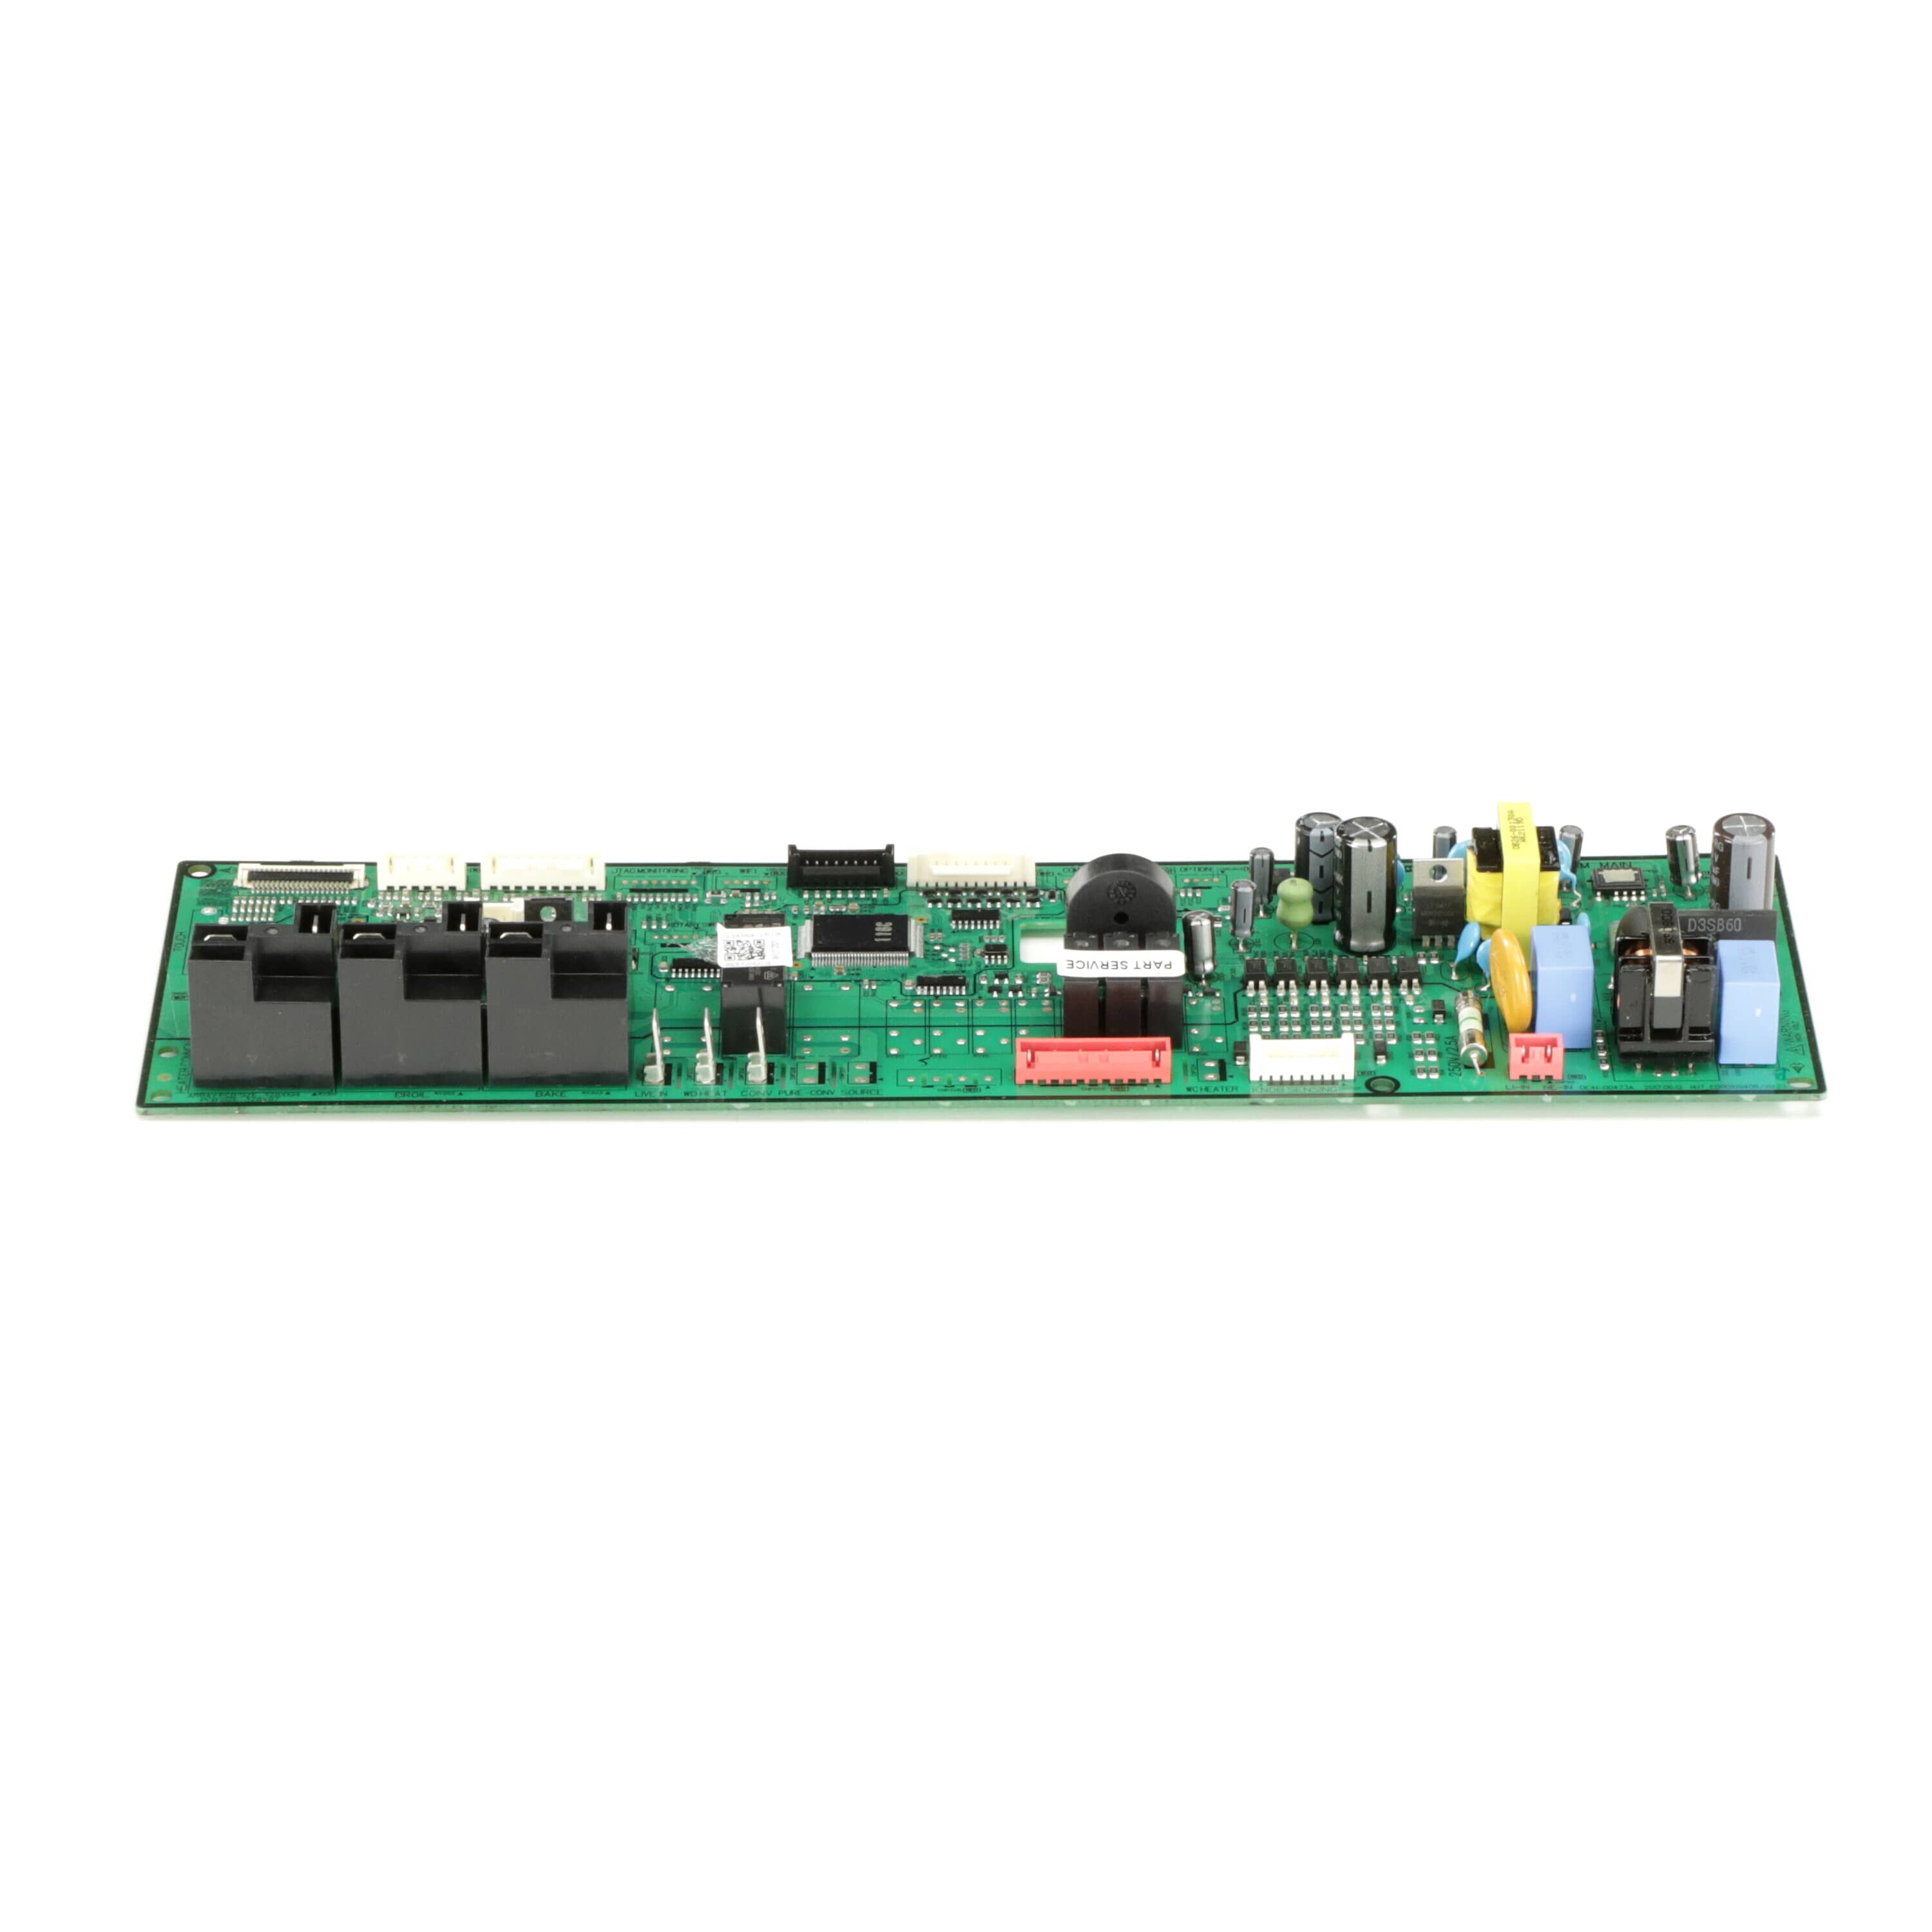 Samsung DE92-04201B Range Oven Control Board